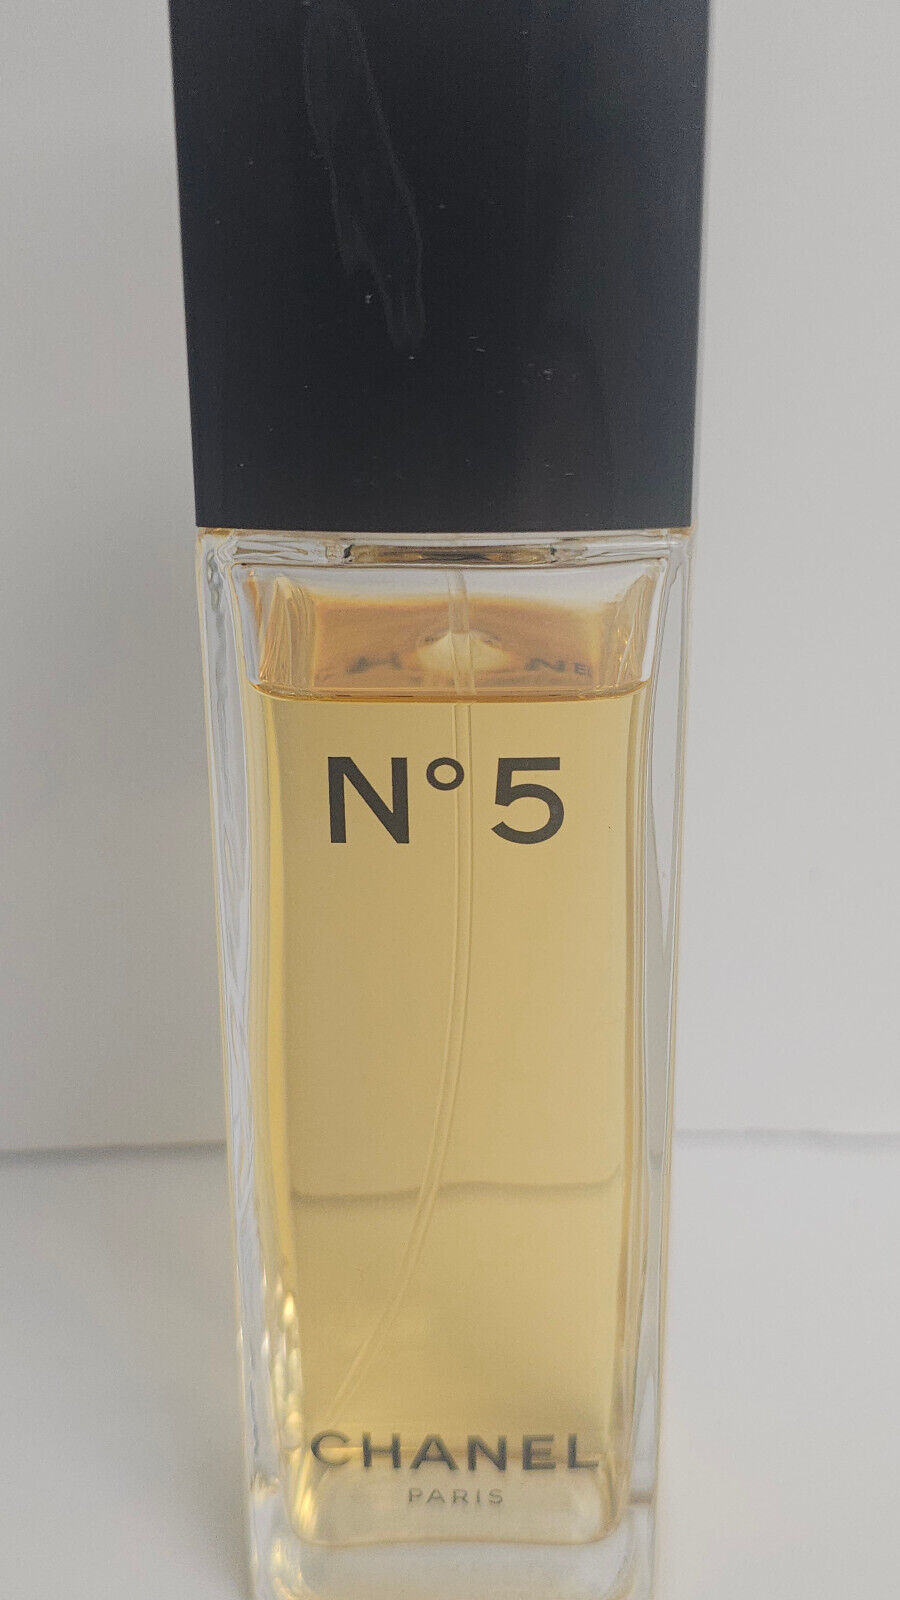 CHANEL No 5 PARIS Eau De Toilette Spray Perfume Women\'s 3.4 FL.oz / 100ml 80%